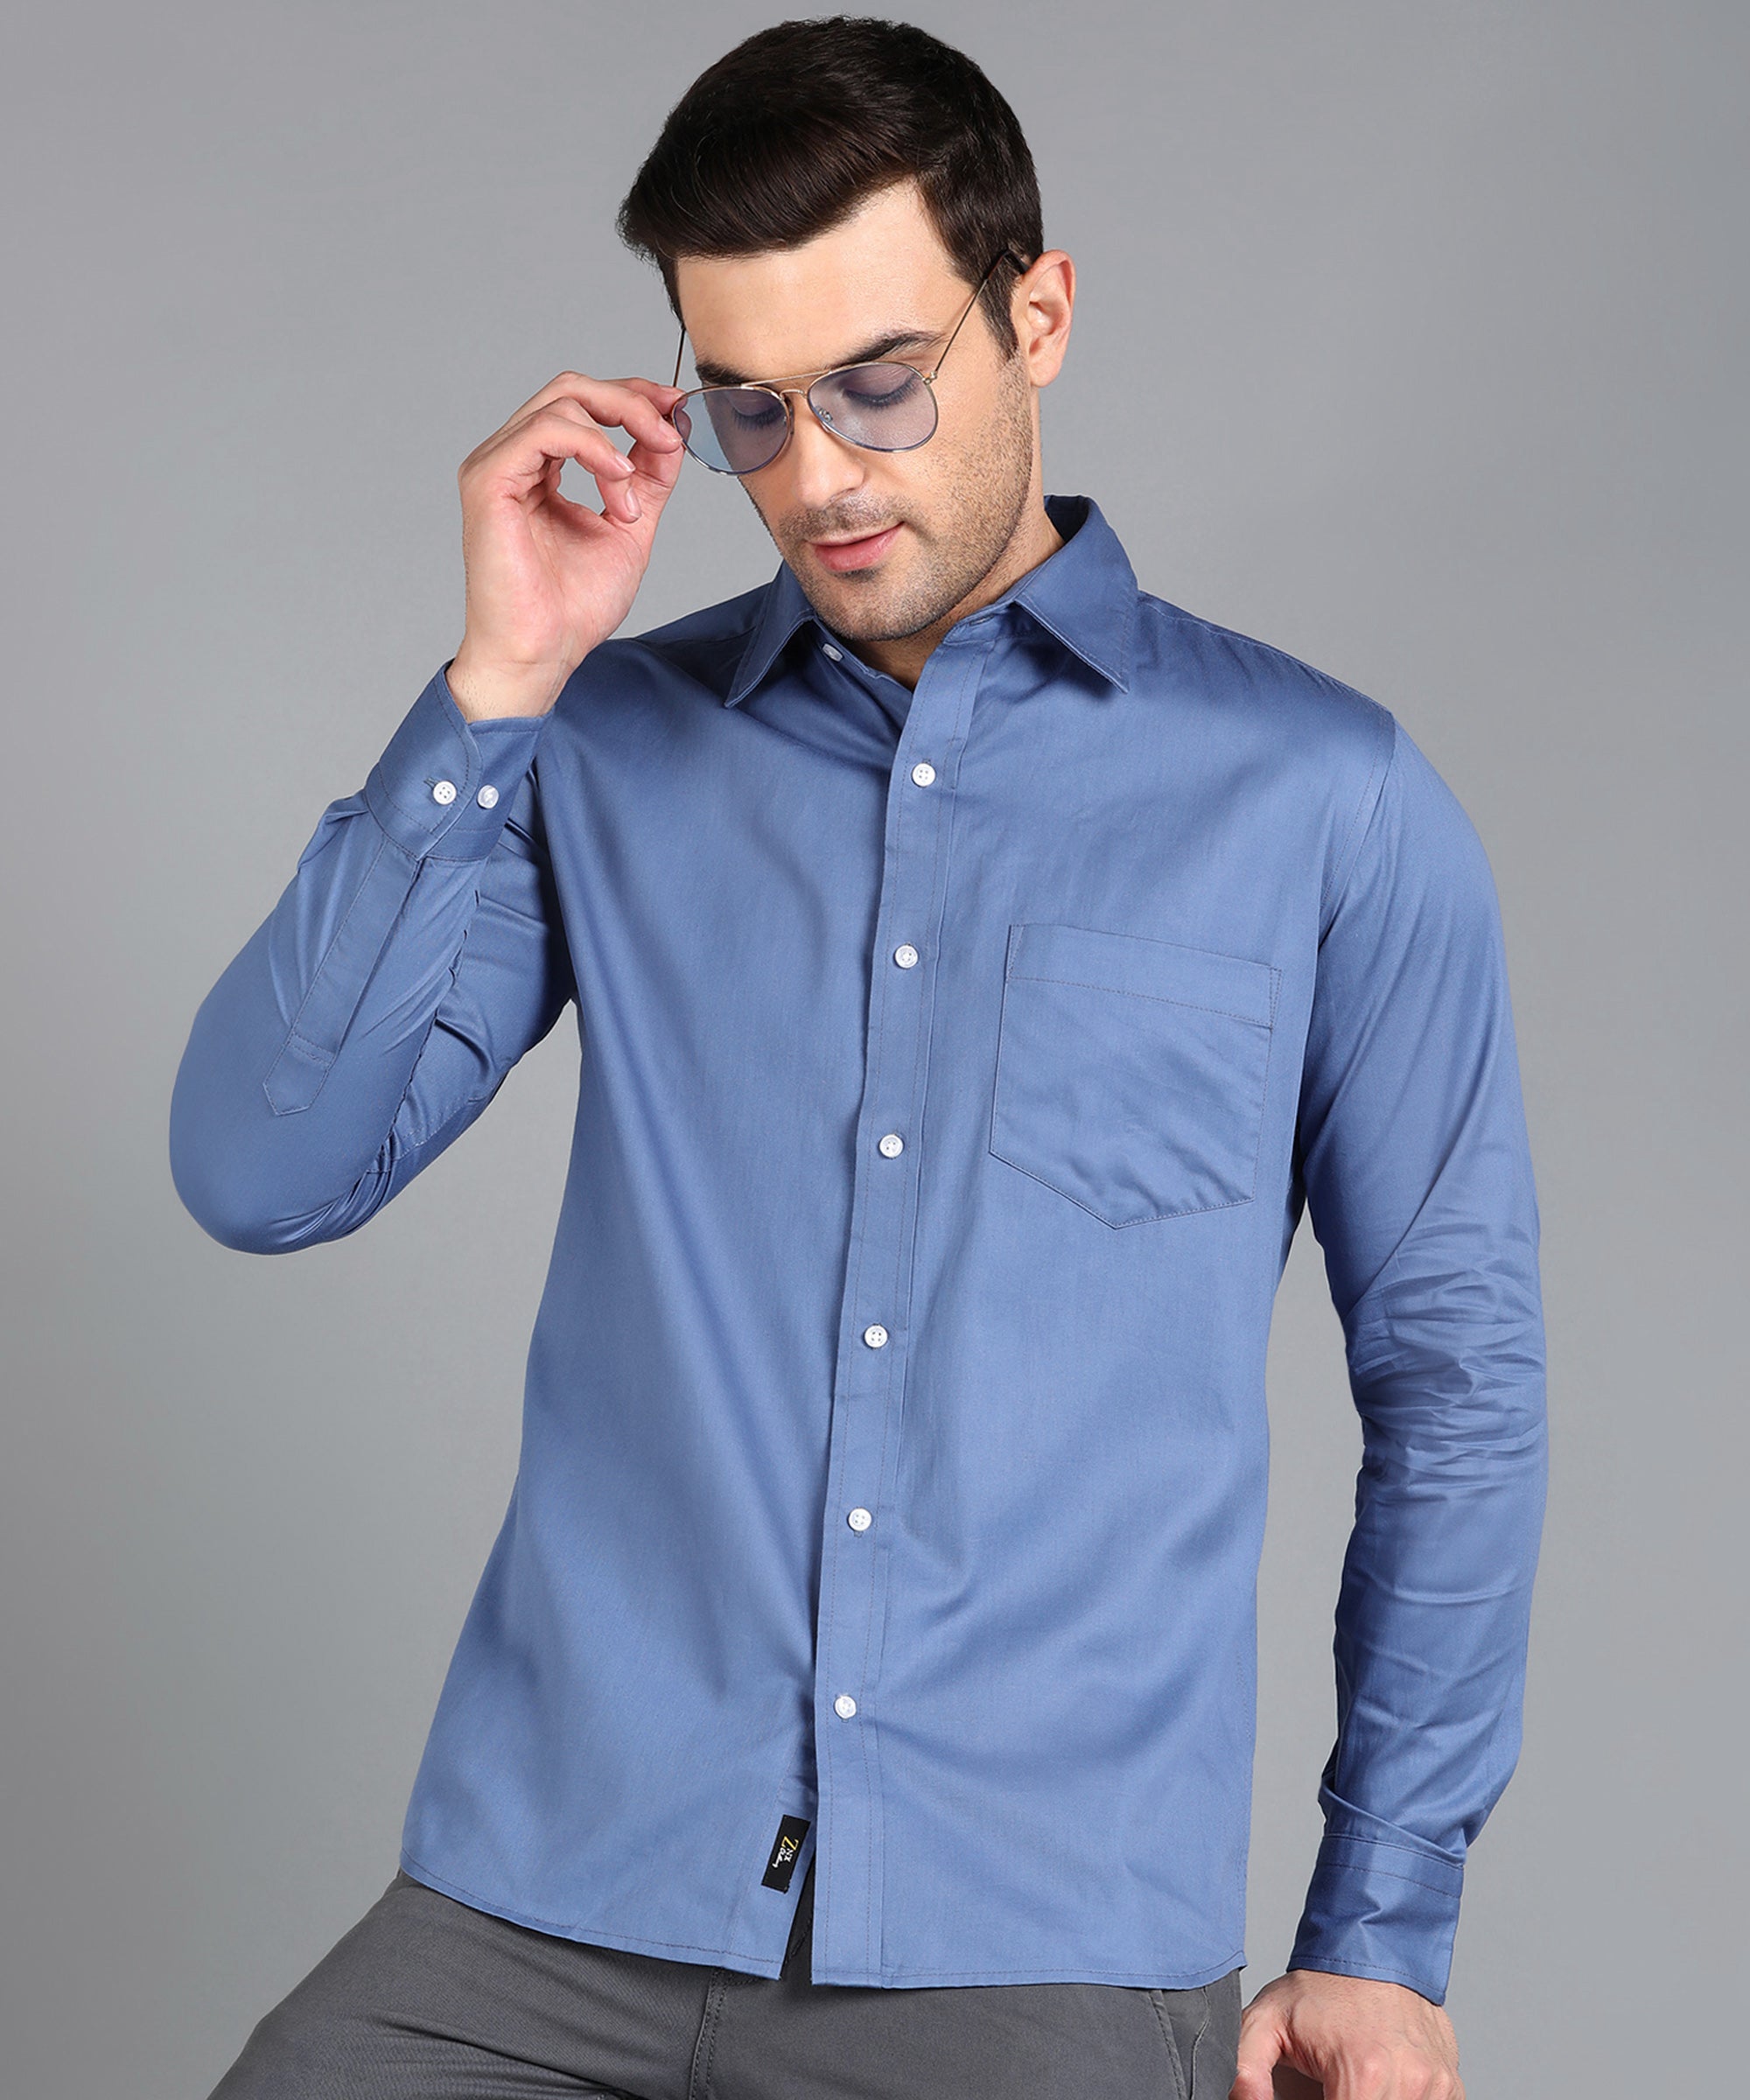 Solid Blue Slim Fit Shirt